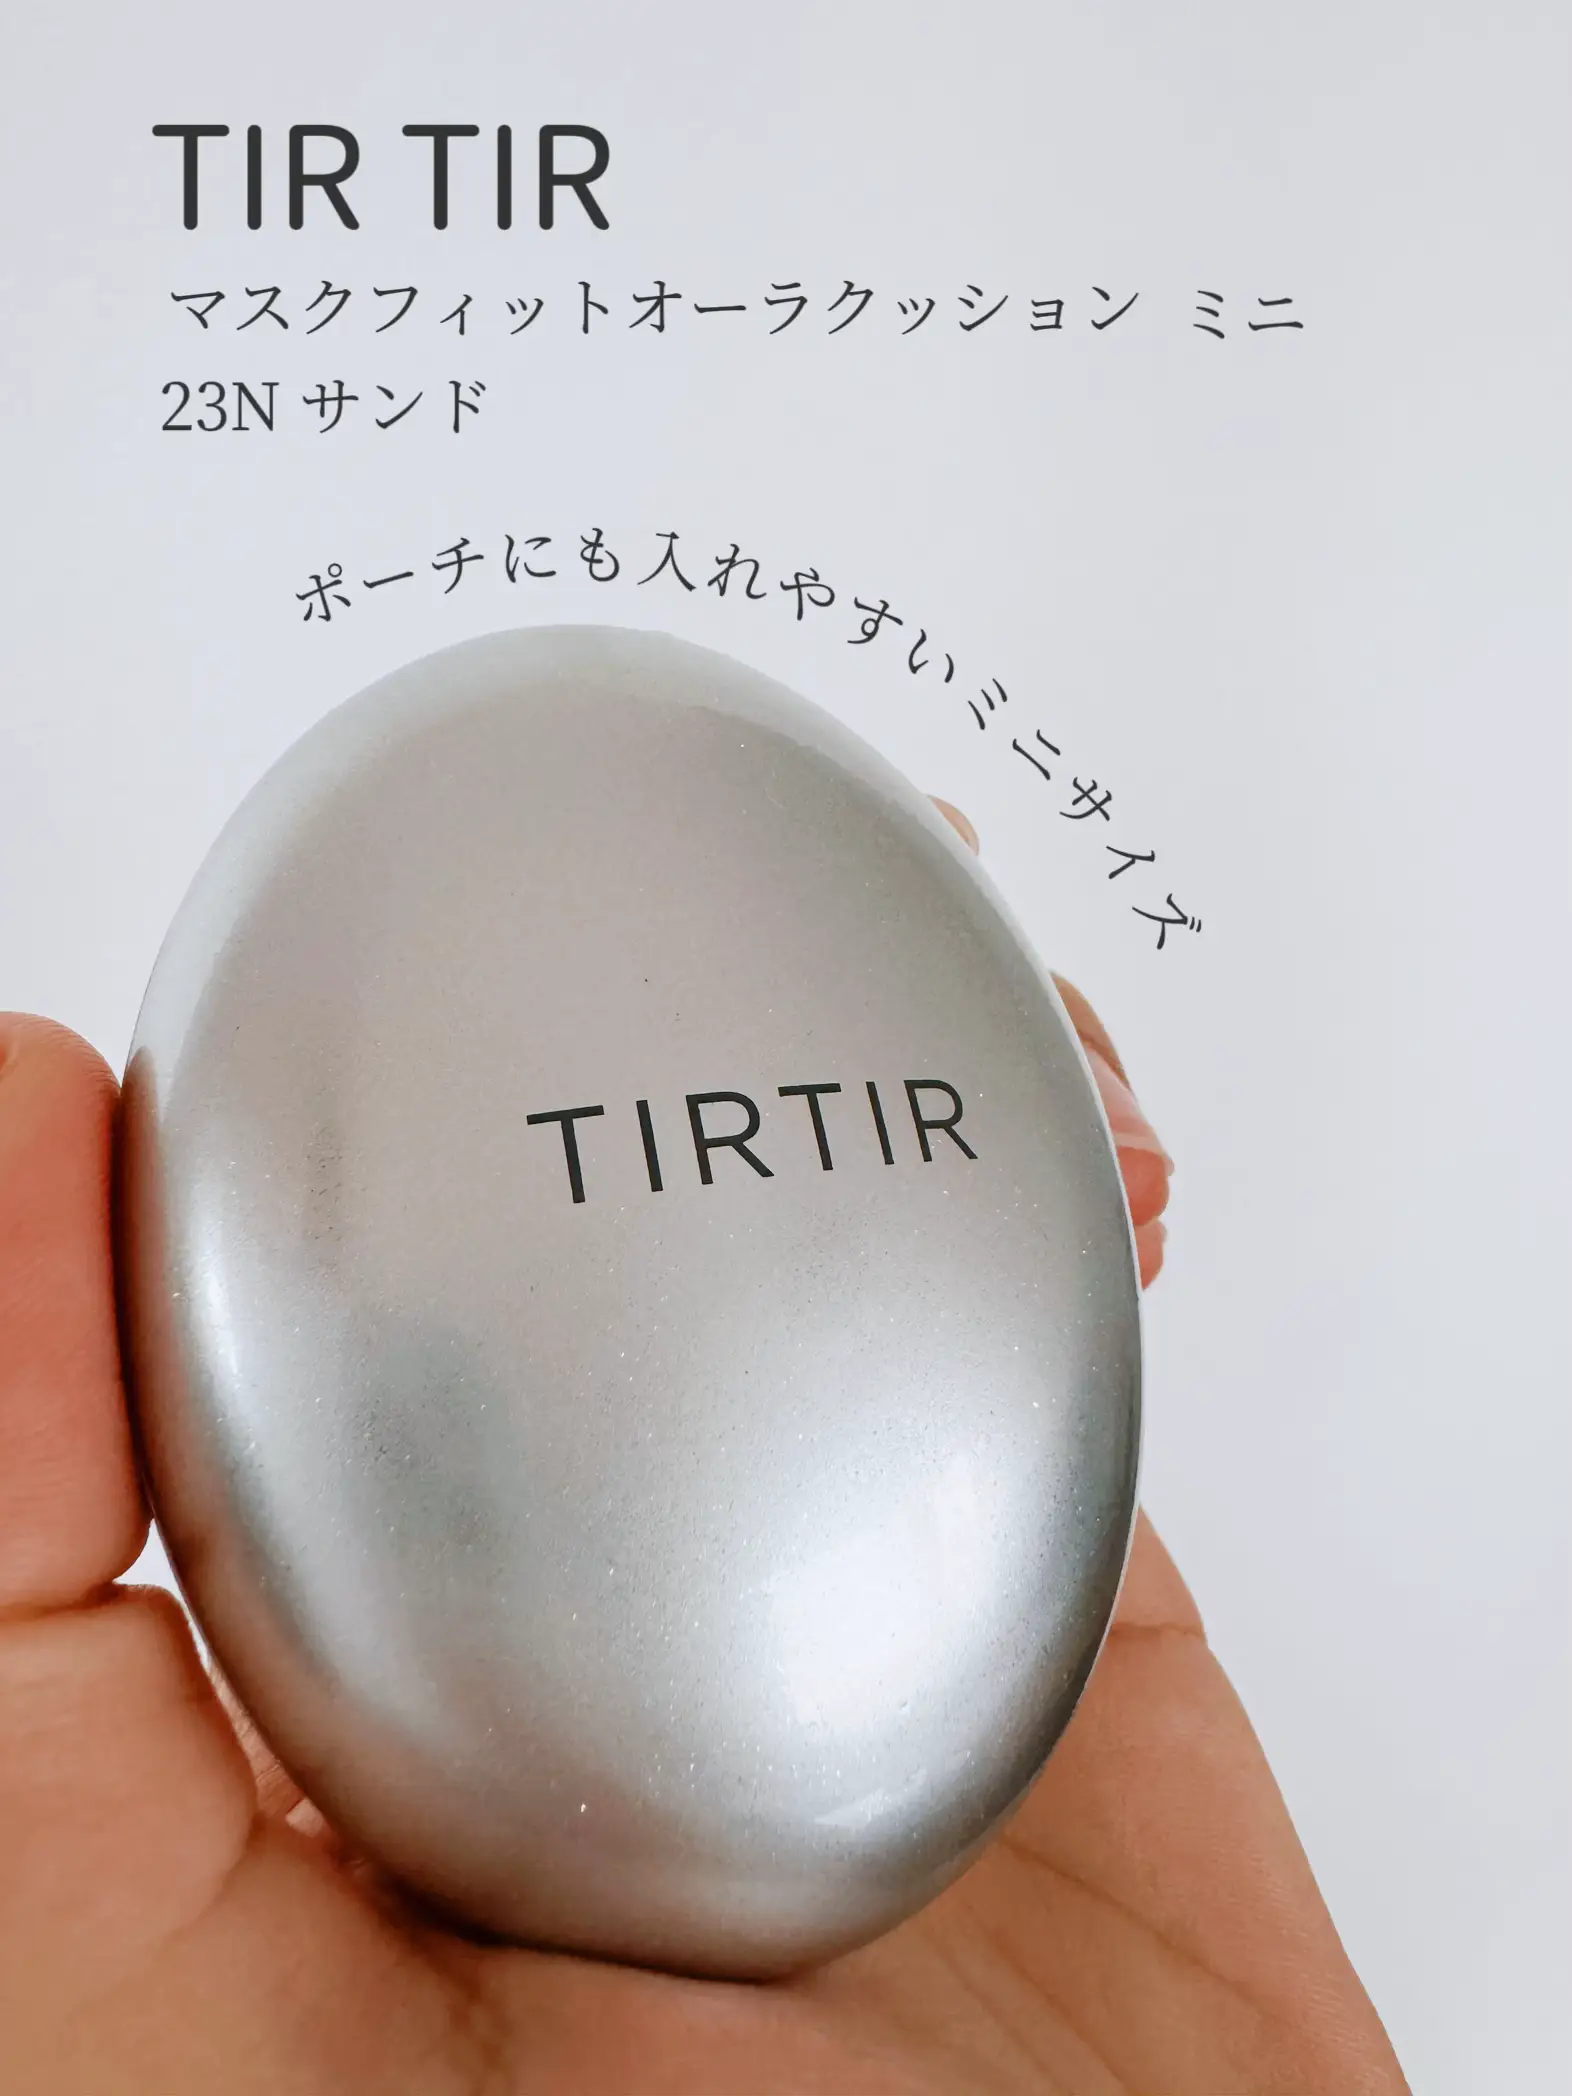 TIRTIR マスクフィットオーラクッション 23N SAND サンド 【GINGER掲載商品】 - ファンデーション